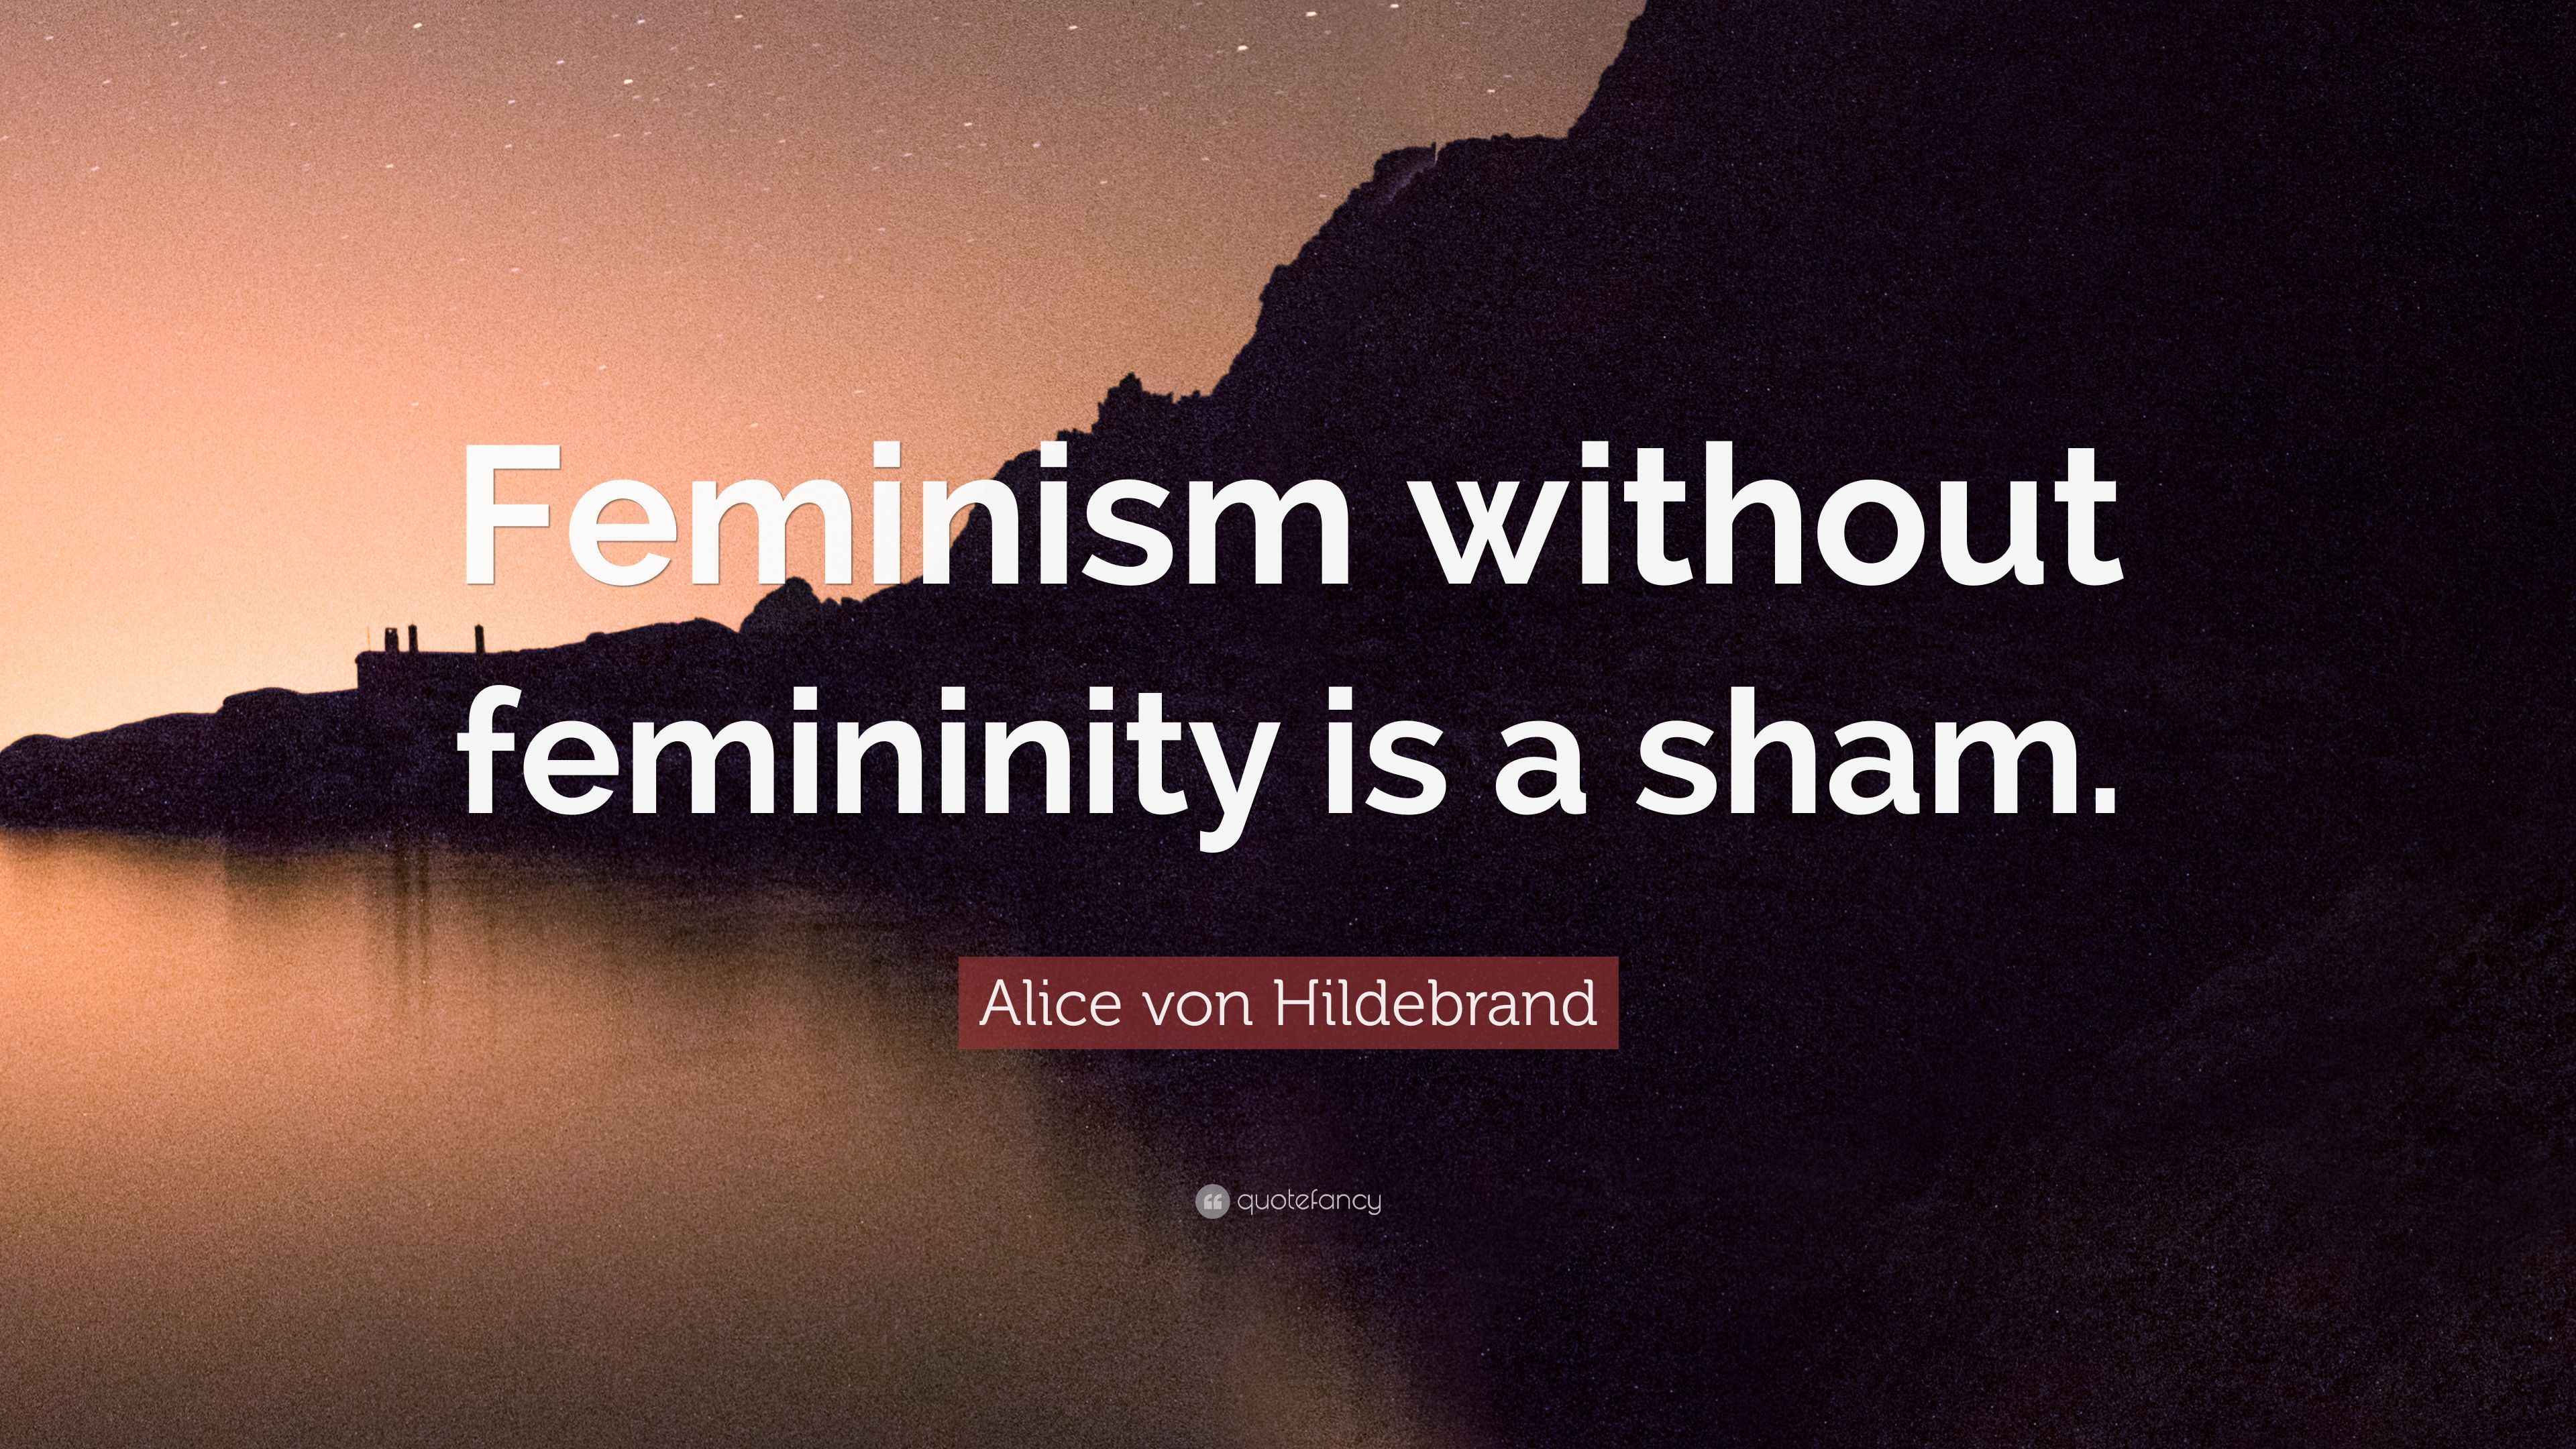 Alice von Hildebrand Quote: “Feminism without femininity is a sham